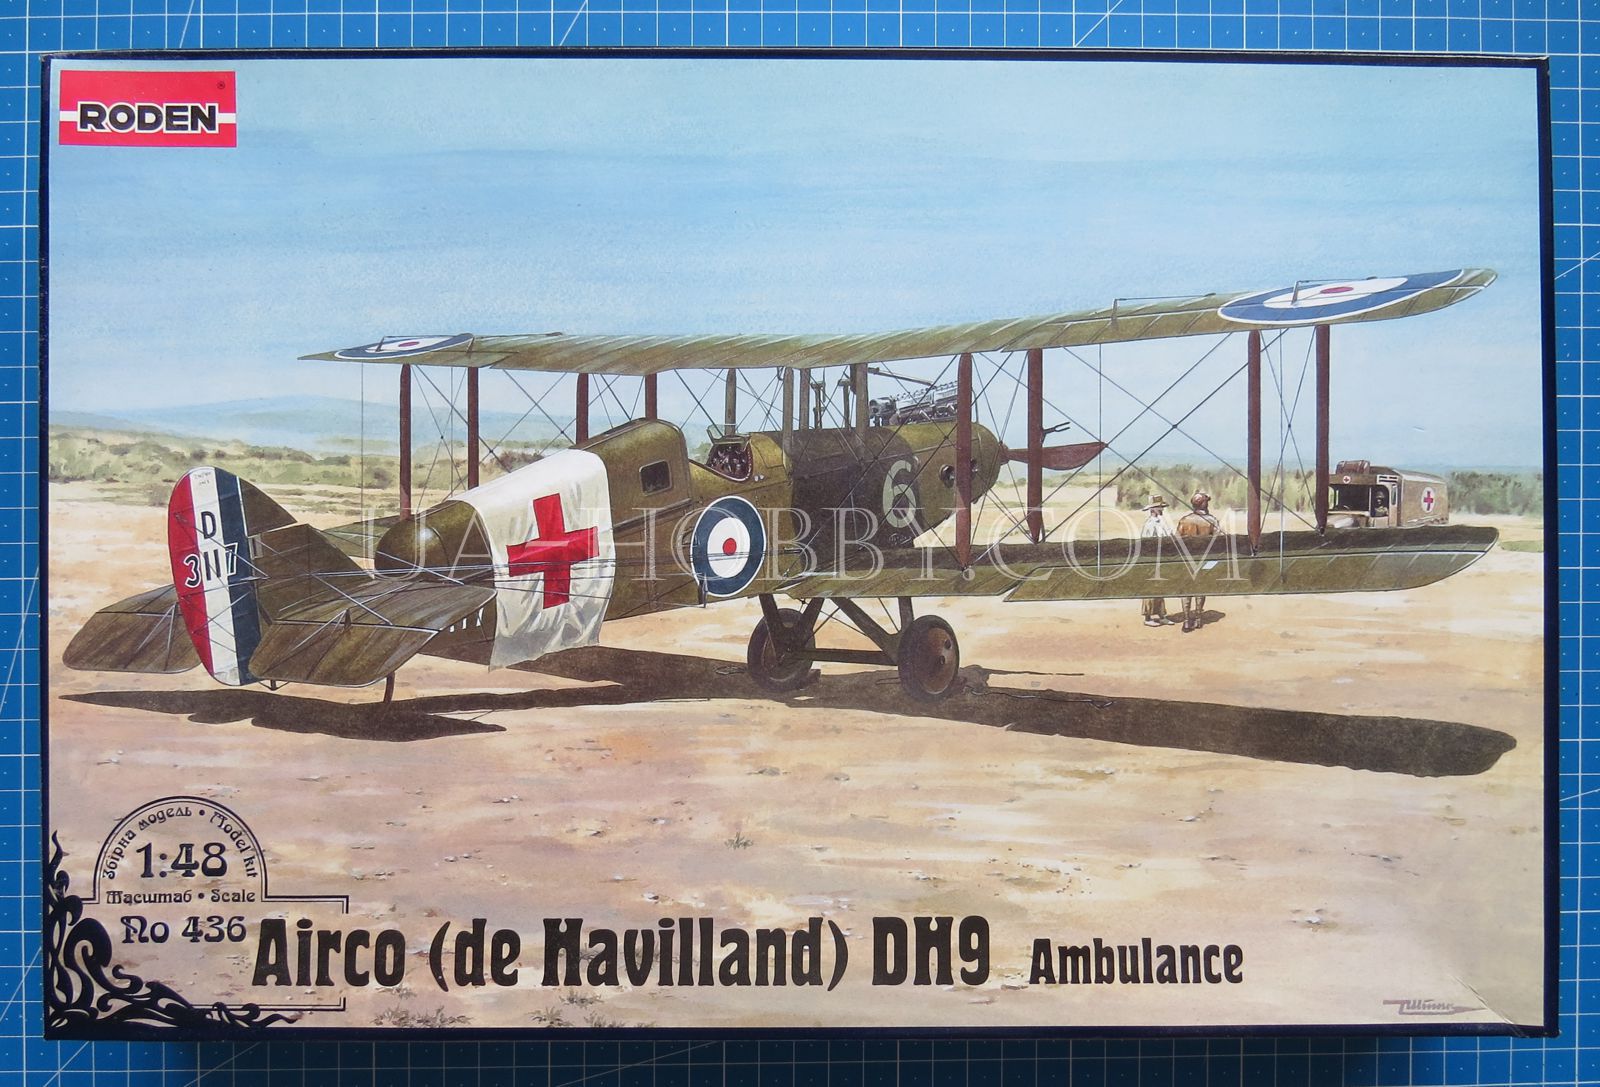 1/48 Airco (de Havilland) DH9 Ambulance. Roden 436